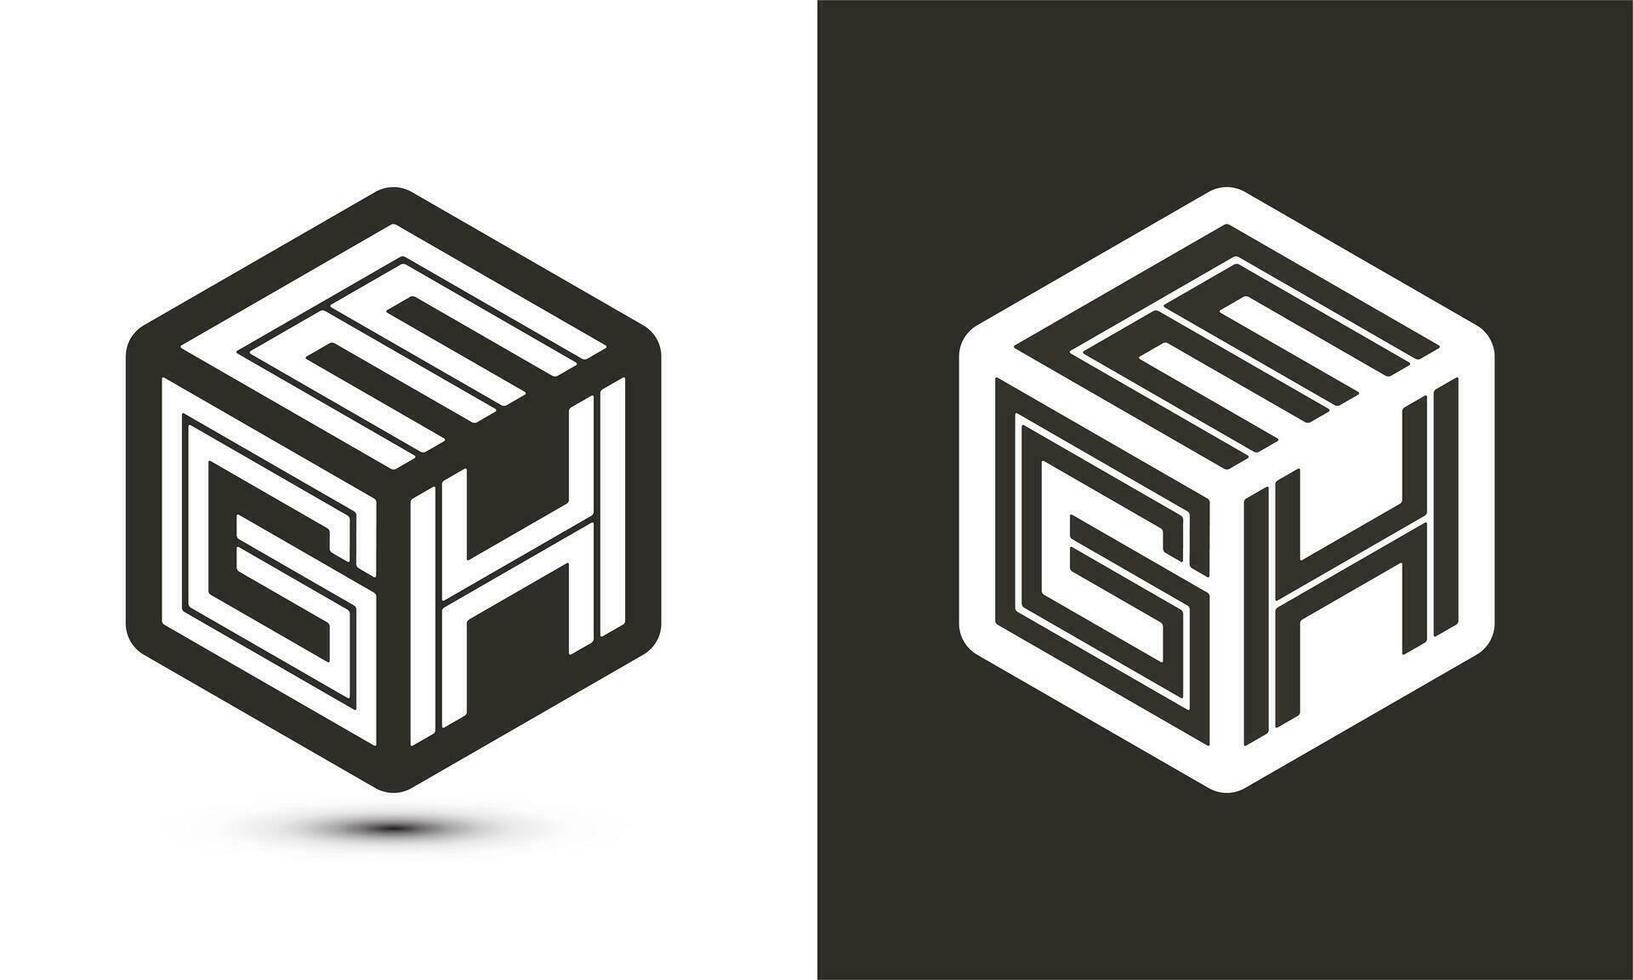 eh carta logotipo Projeto com ilustrador cubo logotipo, vetor logotipo moderno alfabeto Fonte sobreposição estilo.